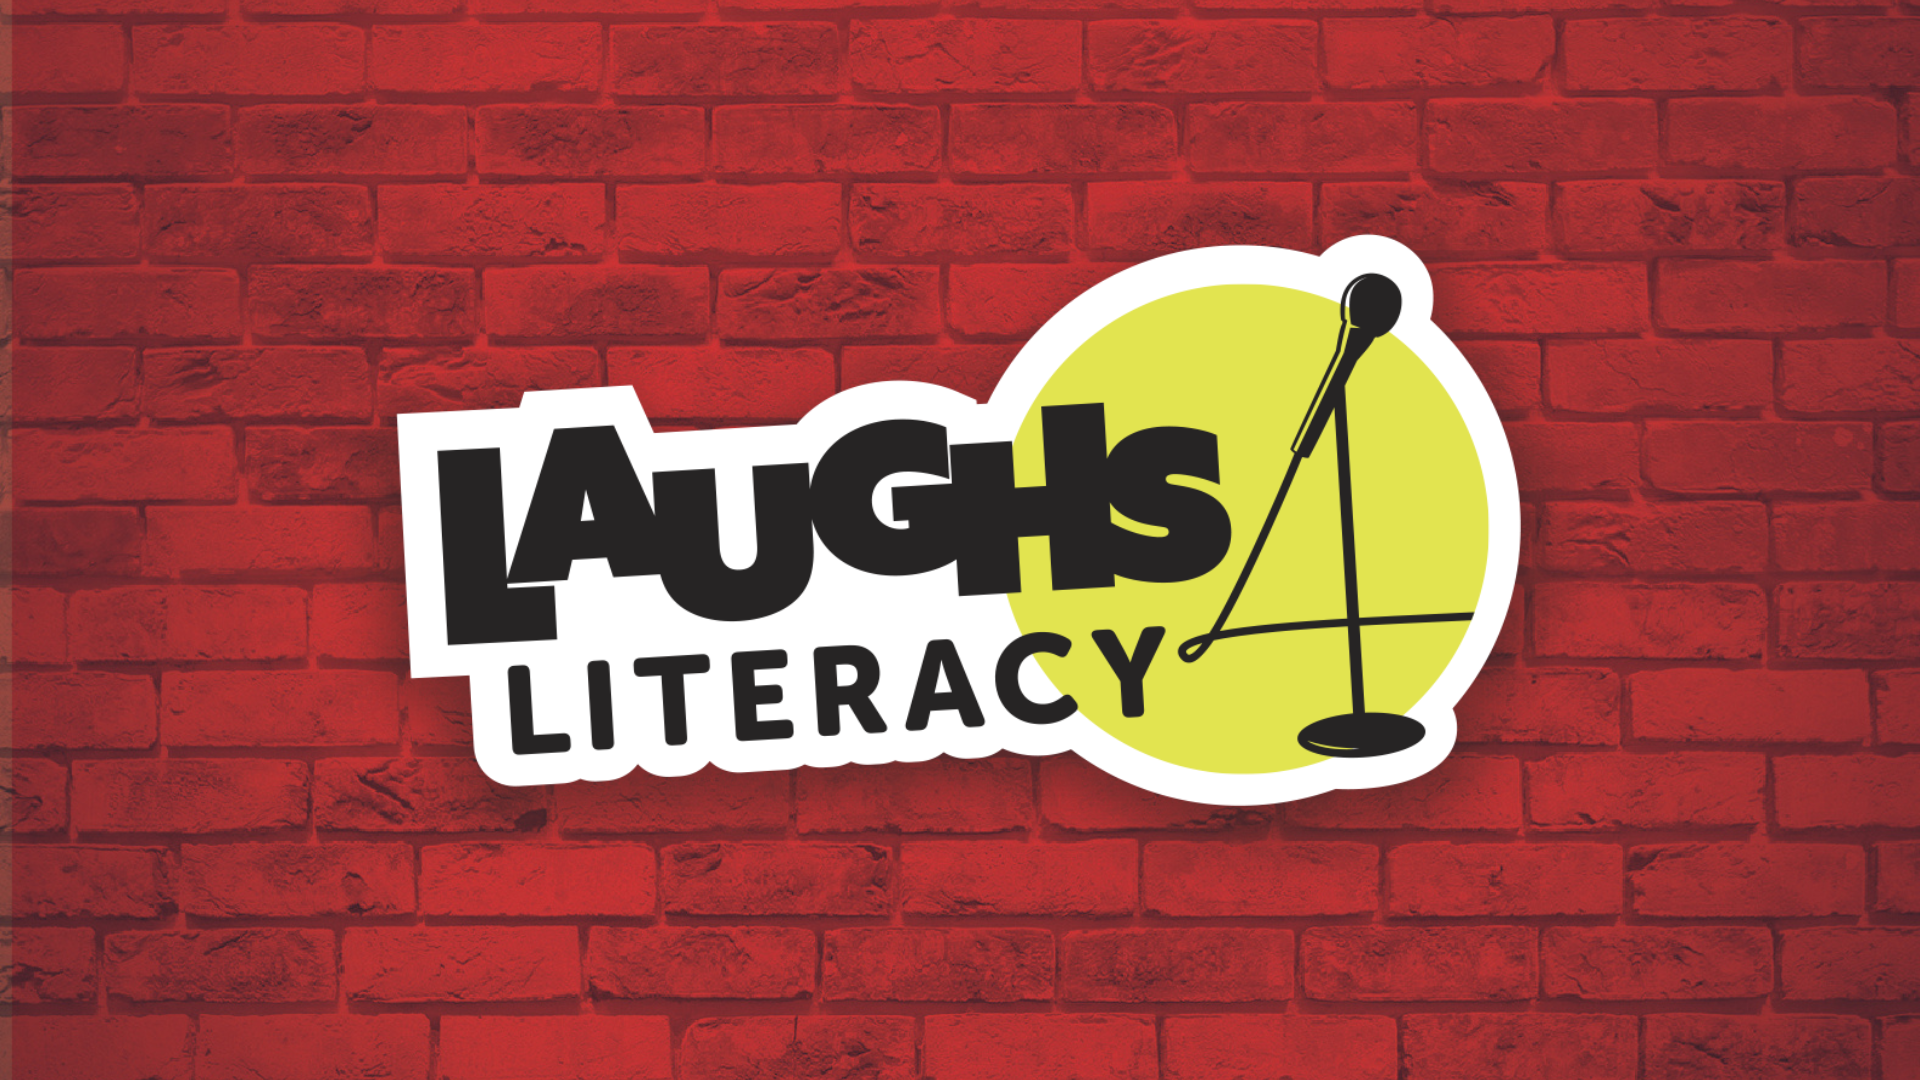 Image of Laughs4Literacy logo